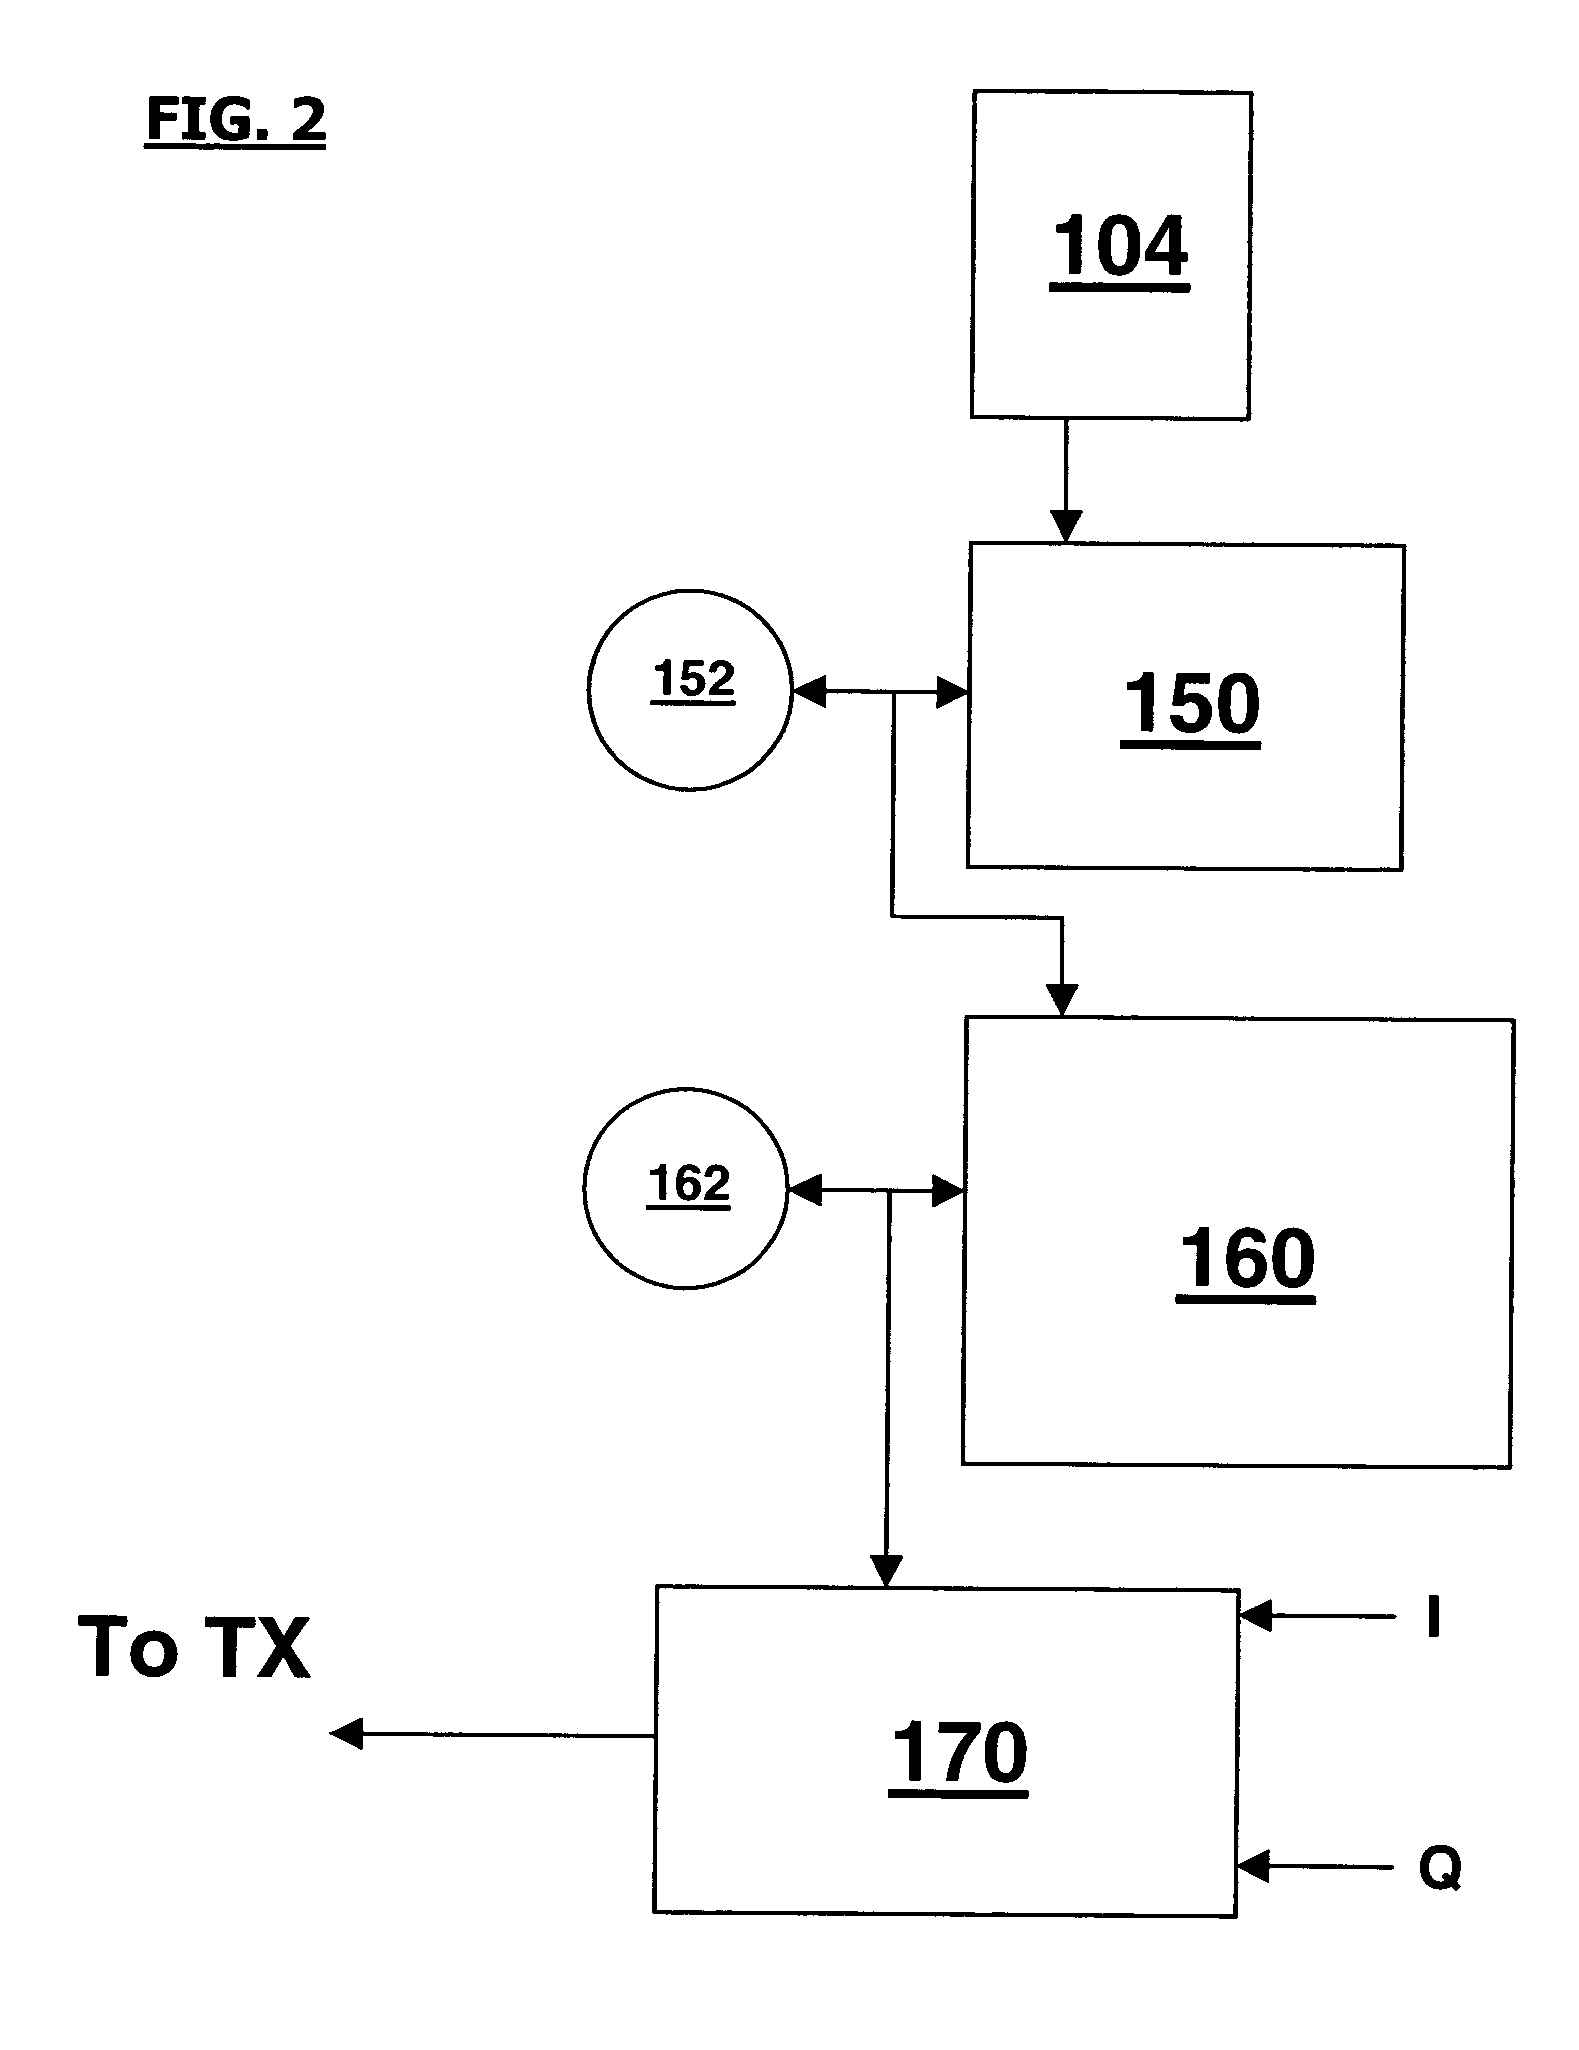 Waveform generator for use in IQ modulation